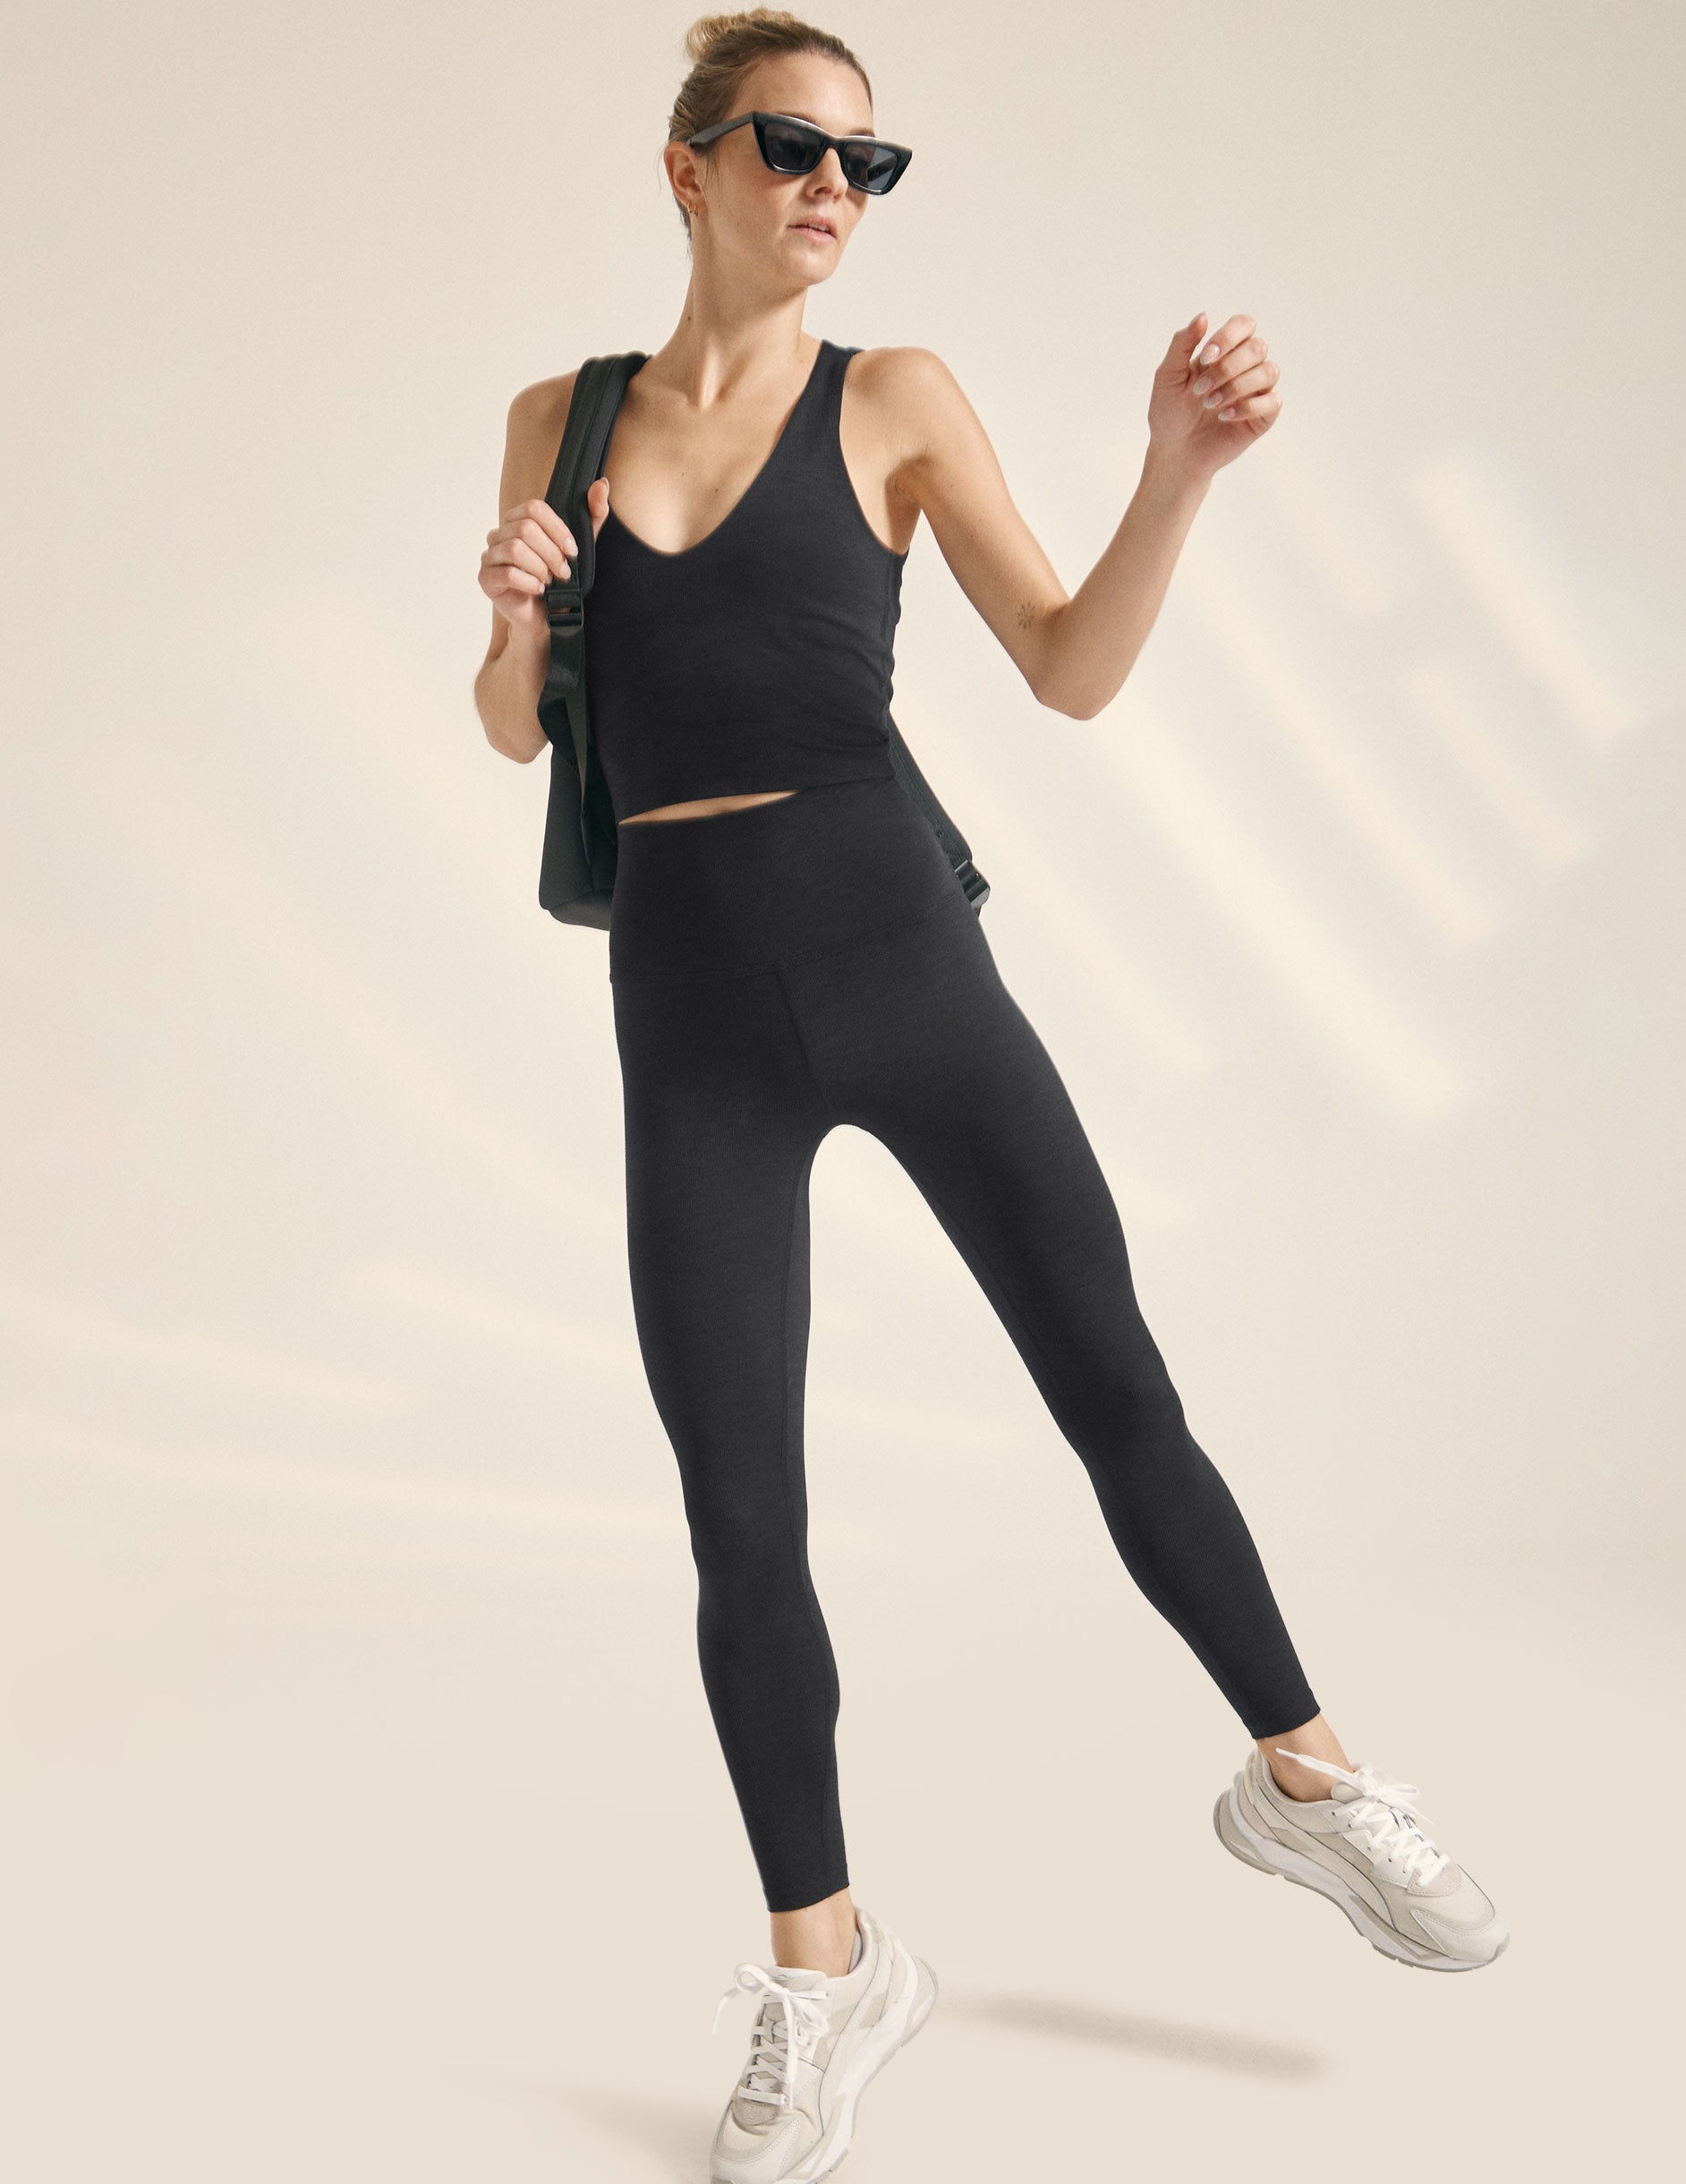 OQQ Women's 2 Piece Yoga Leggings Ribbed Seamless Workout High Waist  Athletic Pants Black Coffee Medium